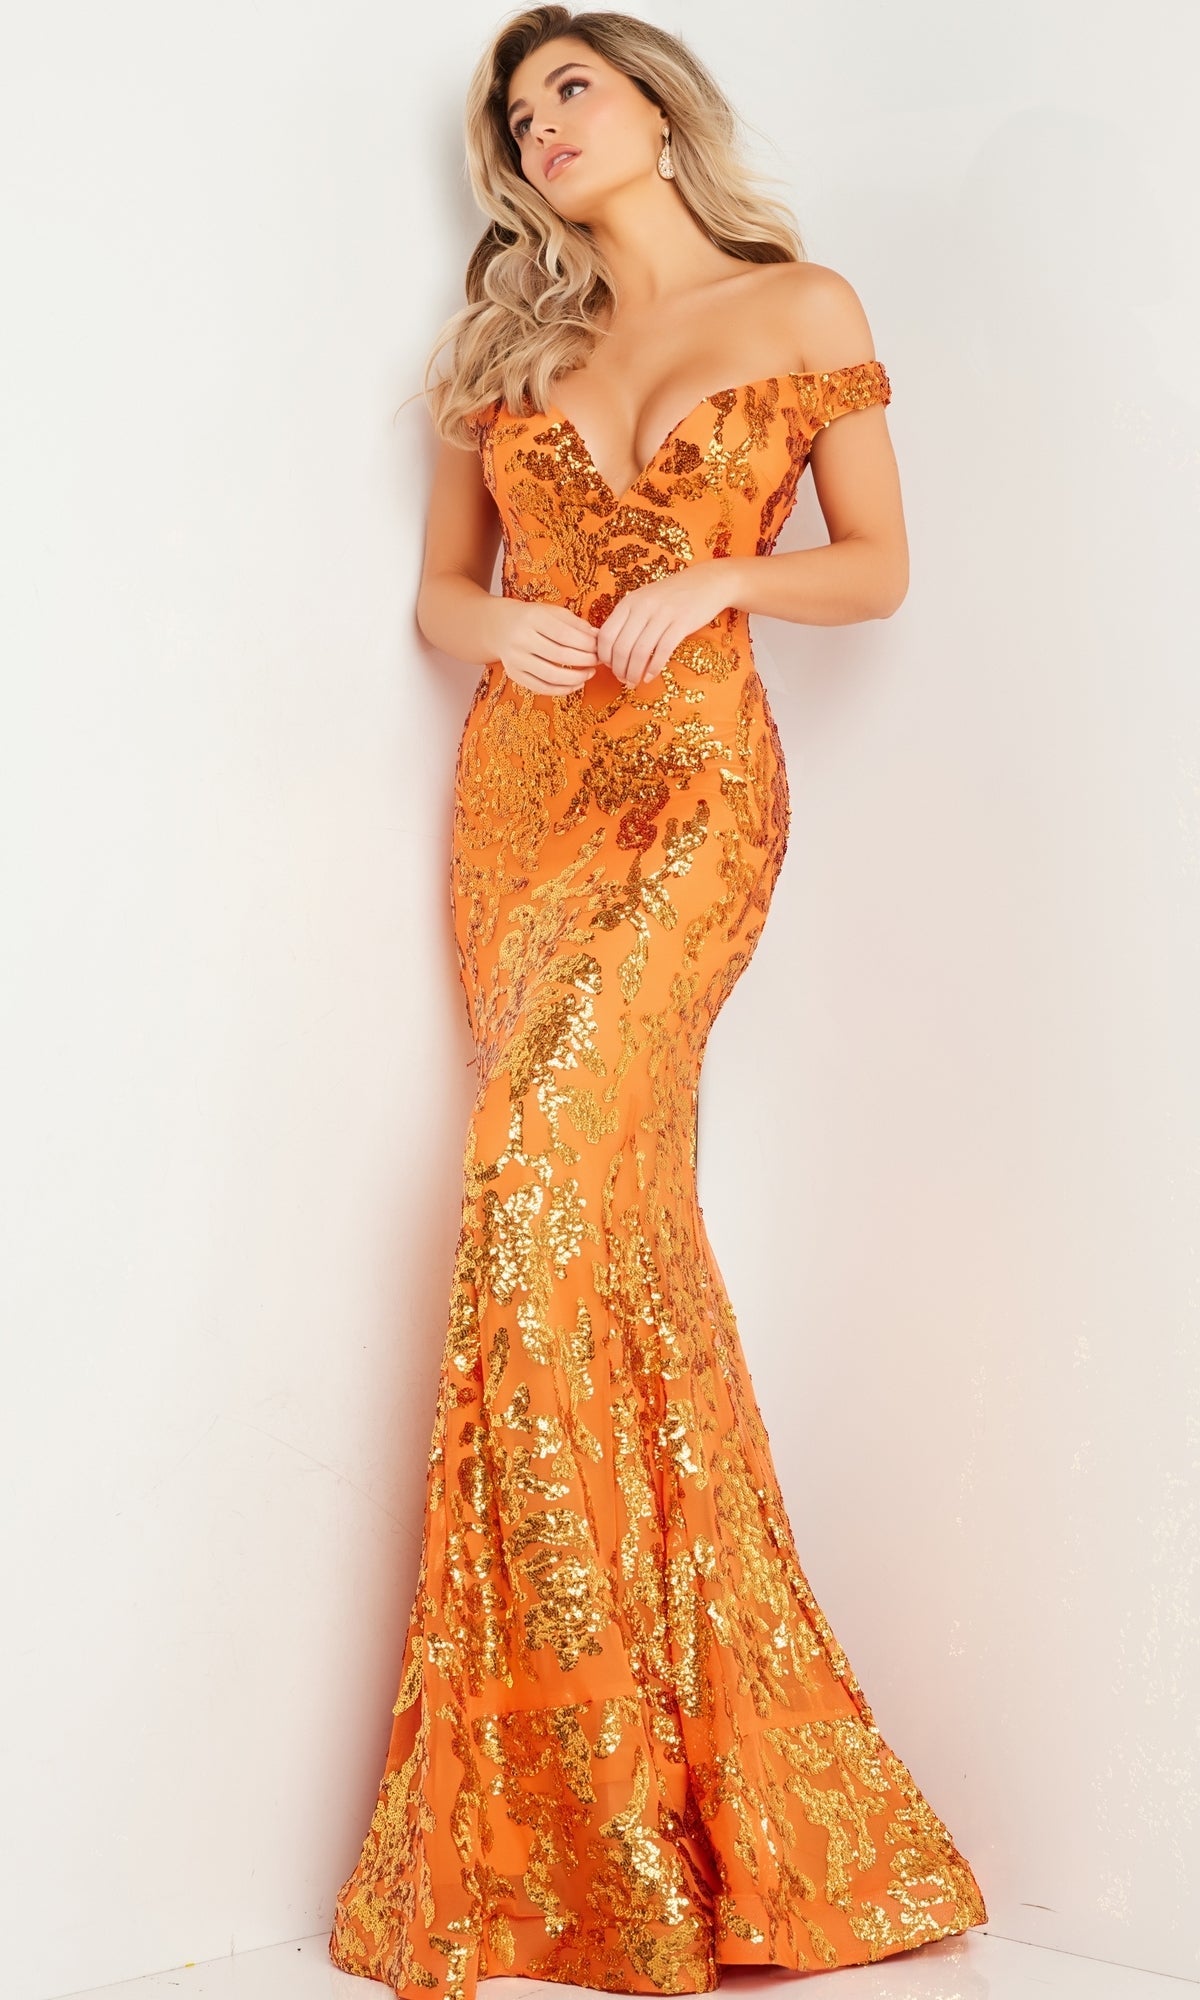  Formal Long Dress 36370 by Jovani